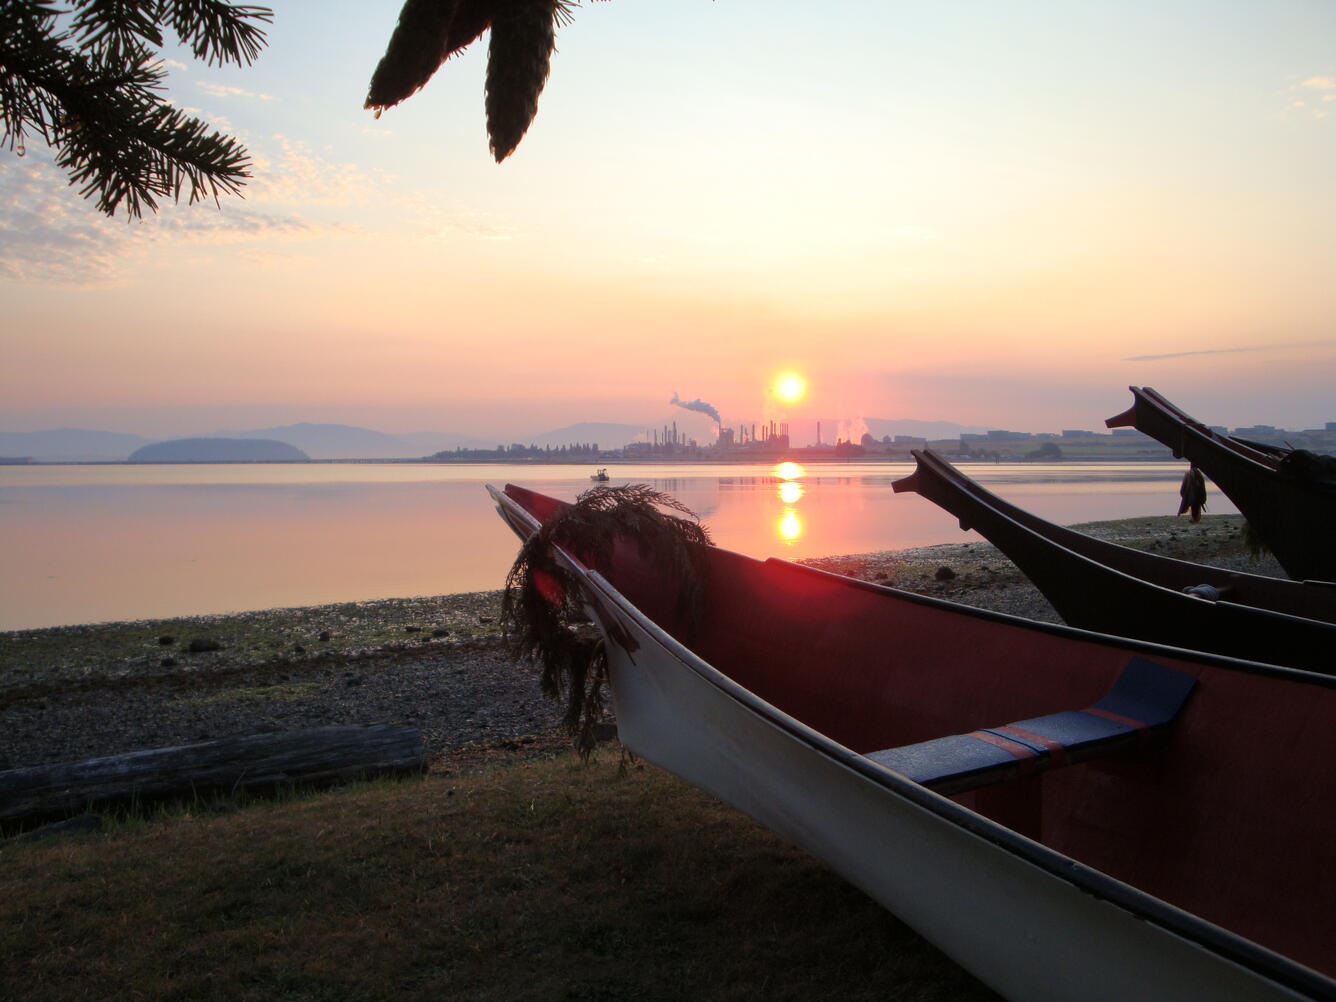 Sunrise over March’s Point from the Samish canoe landing near Anacortes, Washington.